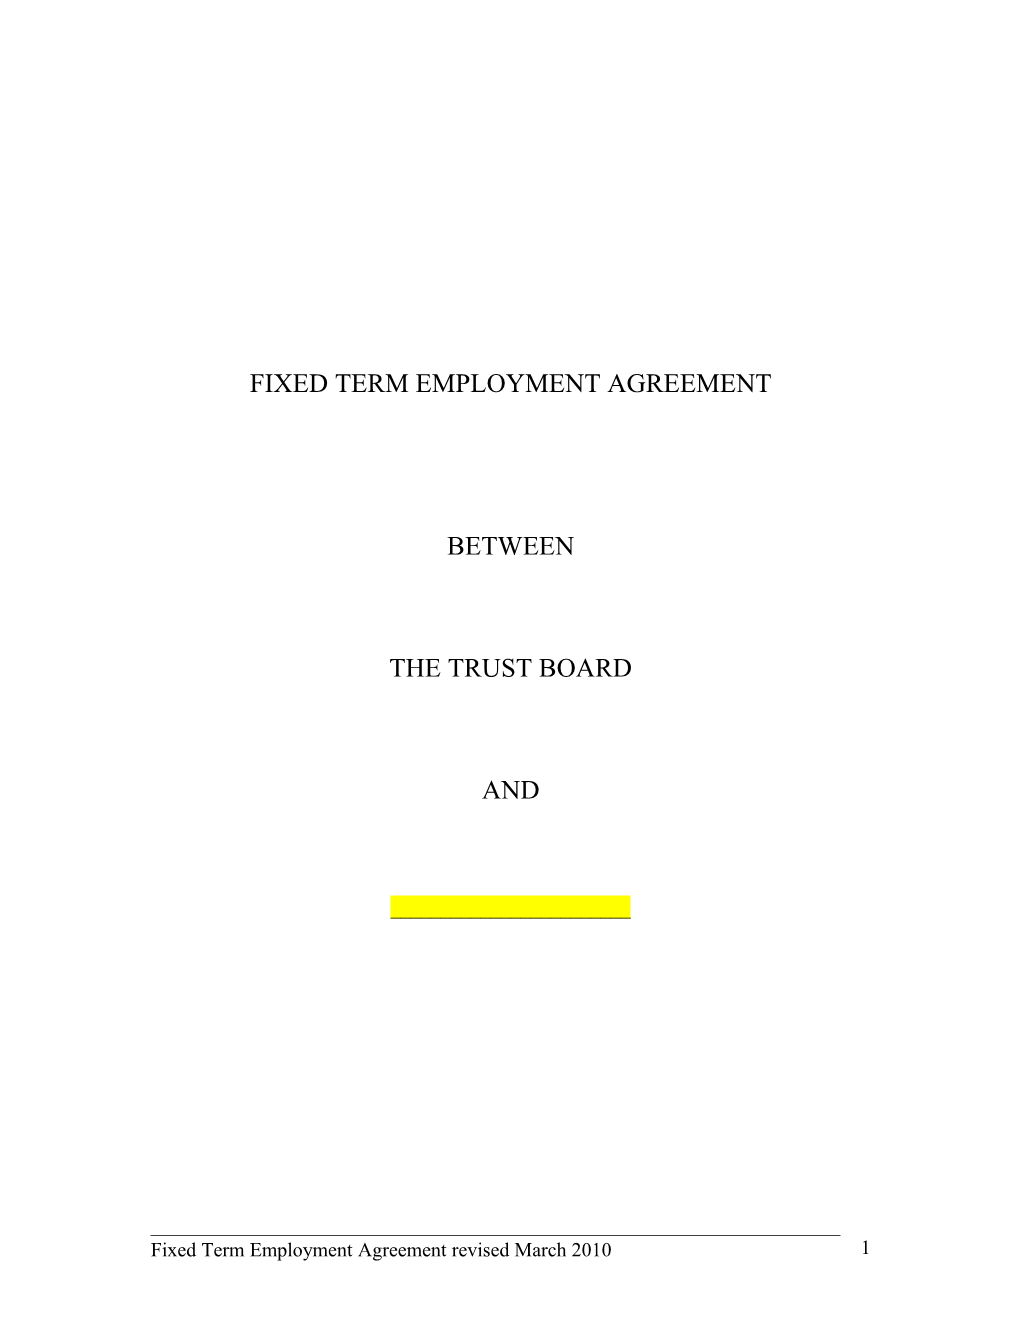 Fixed Term Employment Agreement